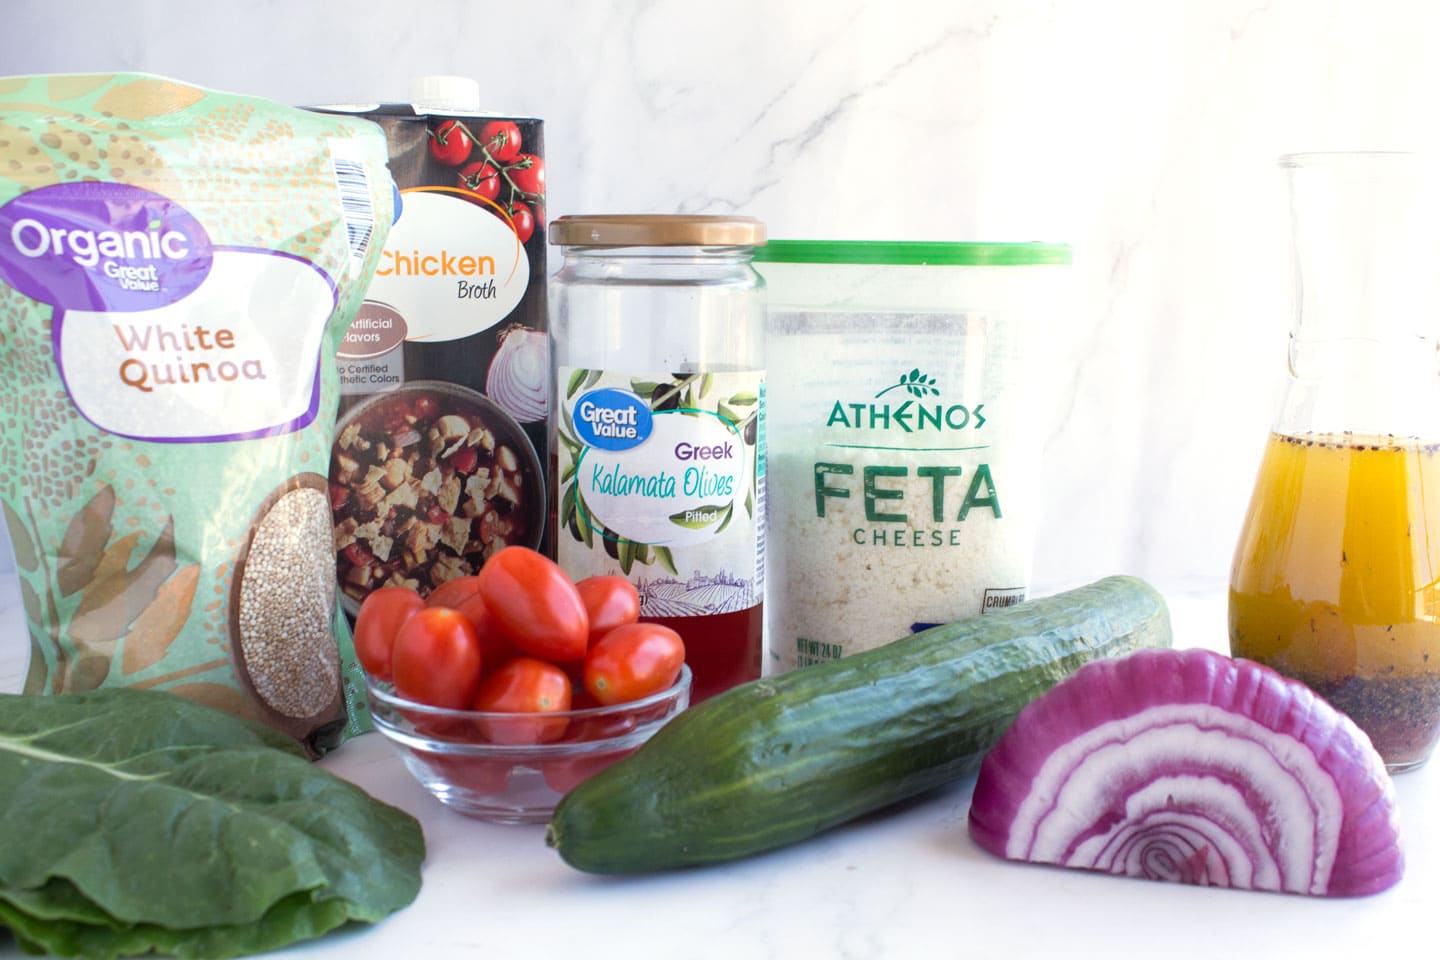 Ingredients for Greek Quinoa Salad Bowl